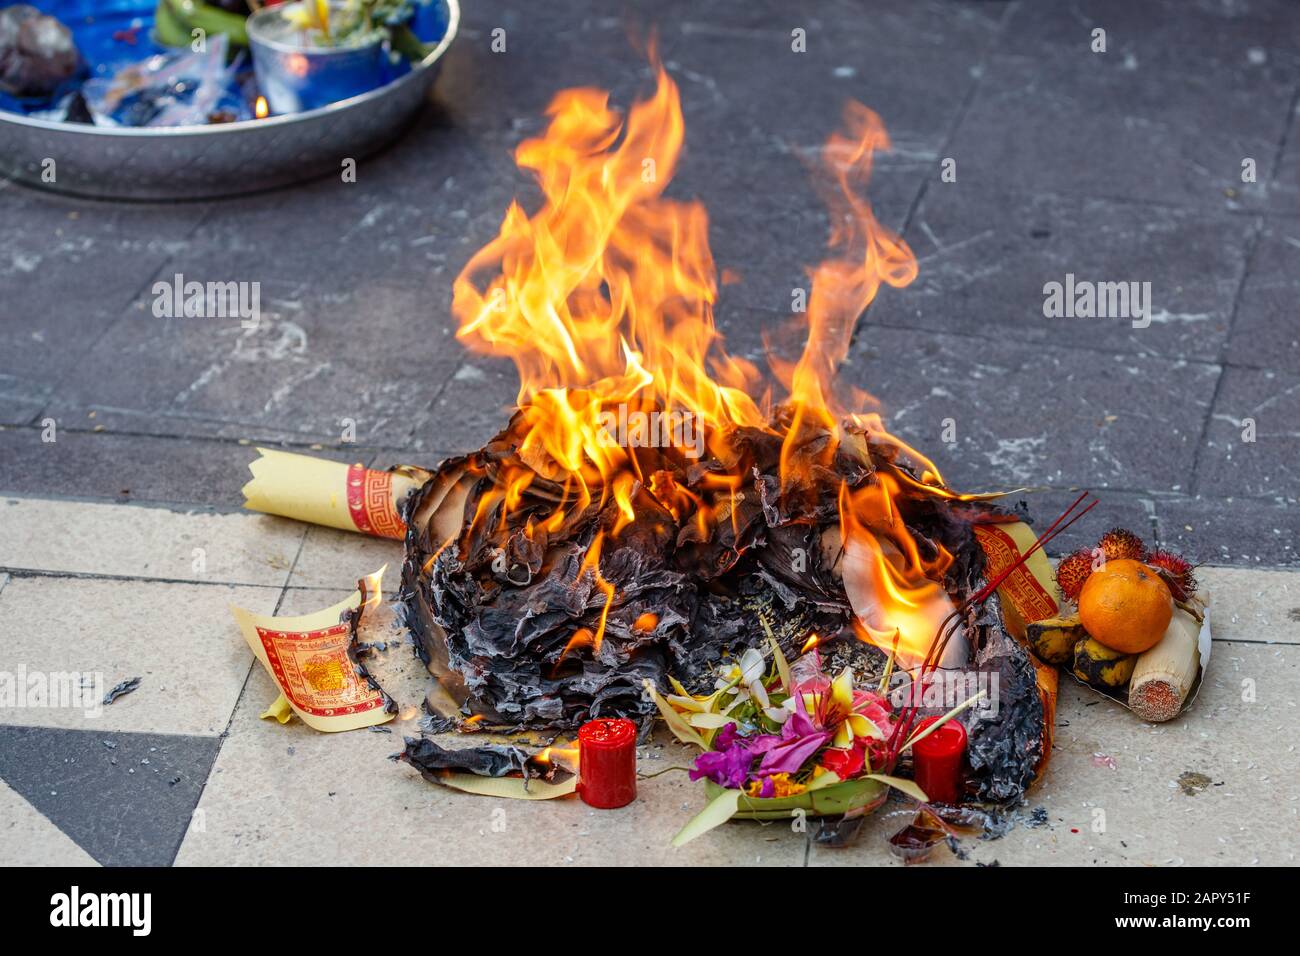 Burning offerings for Lunar New Year (Imlek) celebration ceremony at Chinese Buddhist temple Vihara Dharmayana Kuta, Bali, Indonesia. Stock Photo